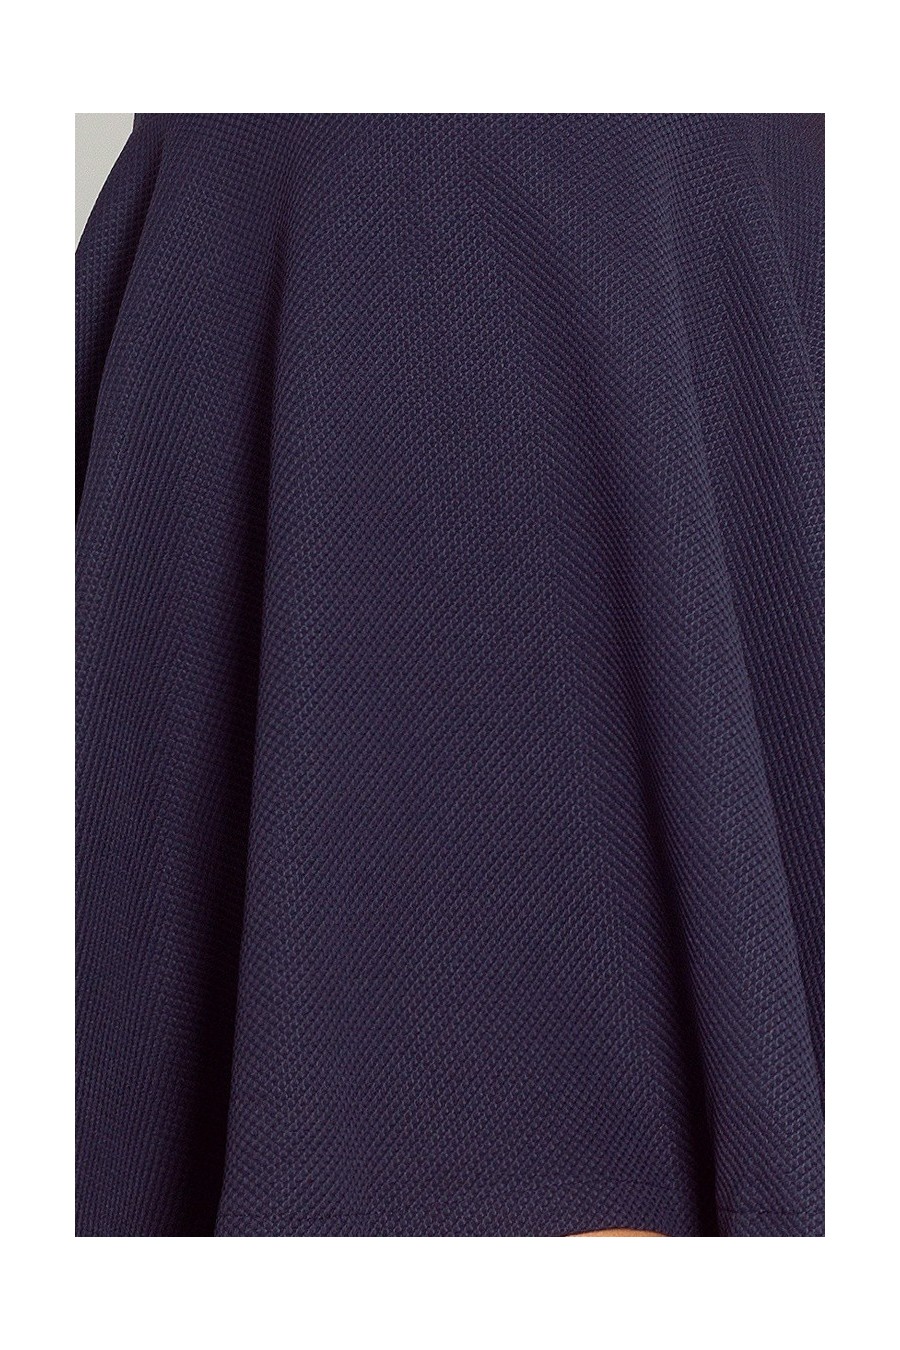 Lacosta - Exclusive asymetrické šaty - tmave modre 66-1